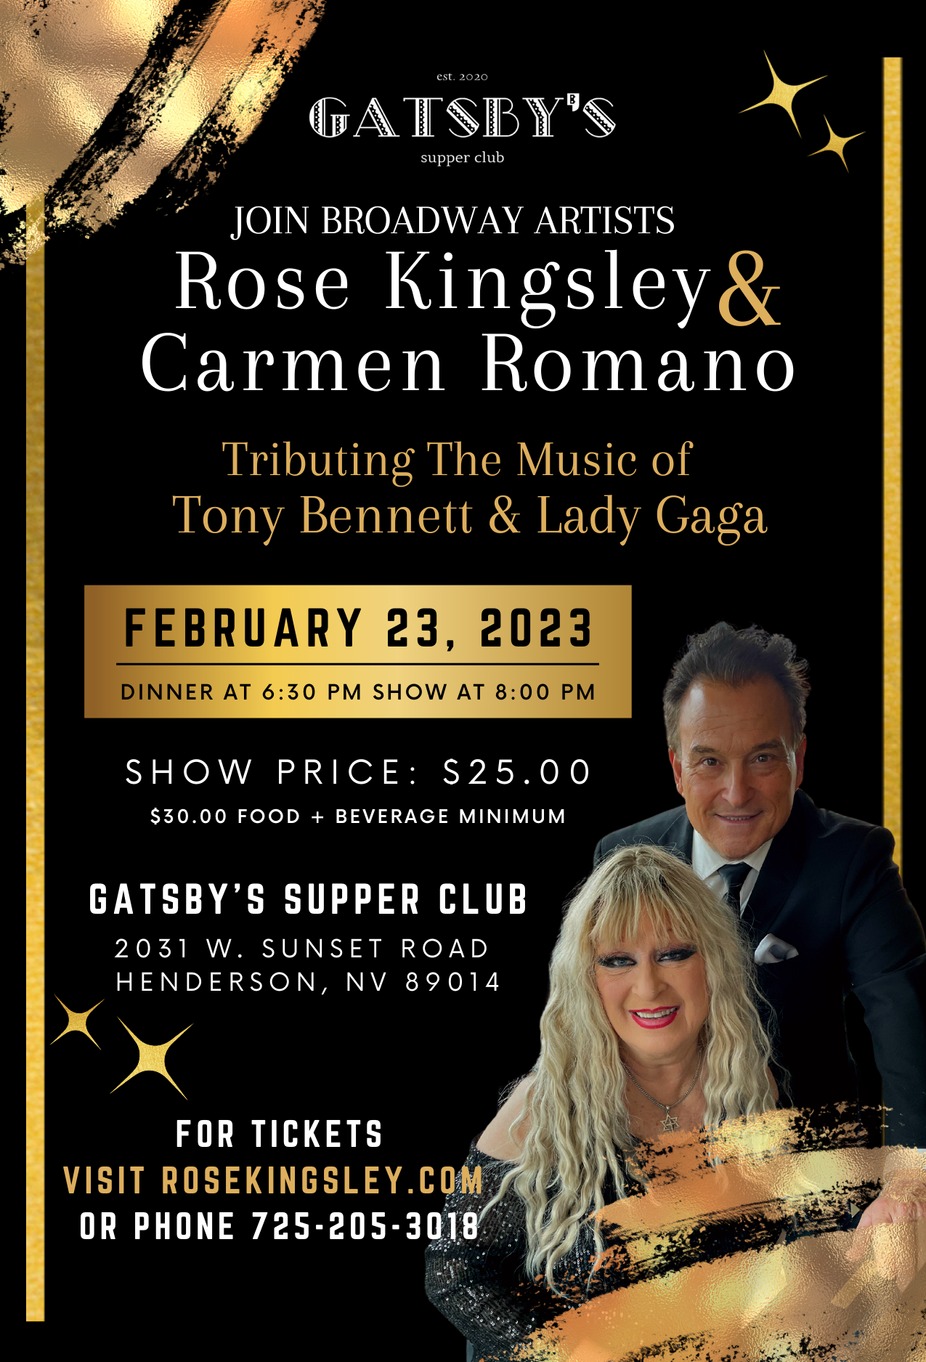 Rose Kingsley & Carmen Romano - Tributing The Music of Tony Bennett & Lady Gaga event photo